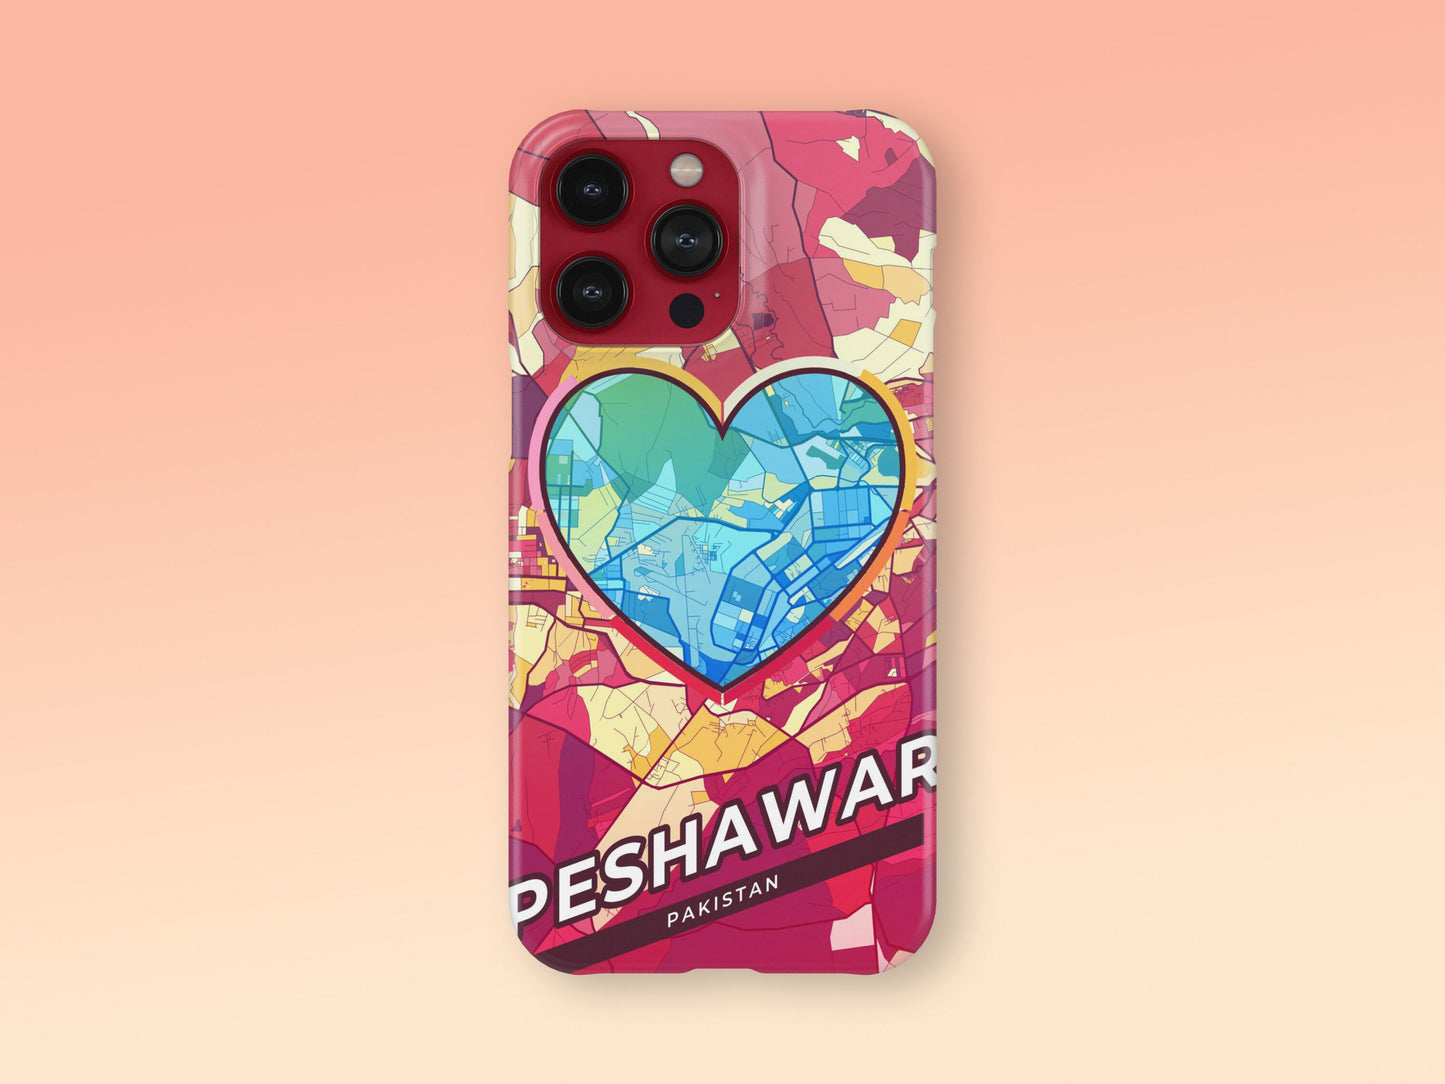 Peshawar Pakistan slim phone case with colorful icon 2